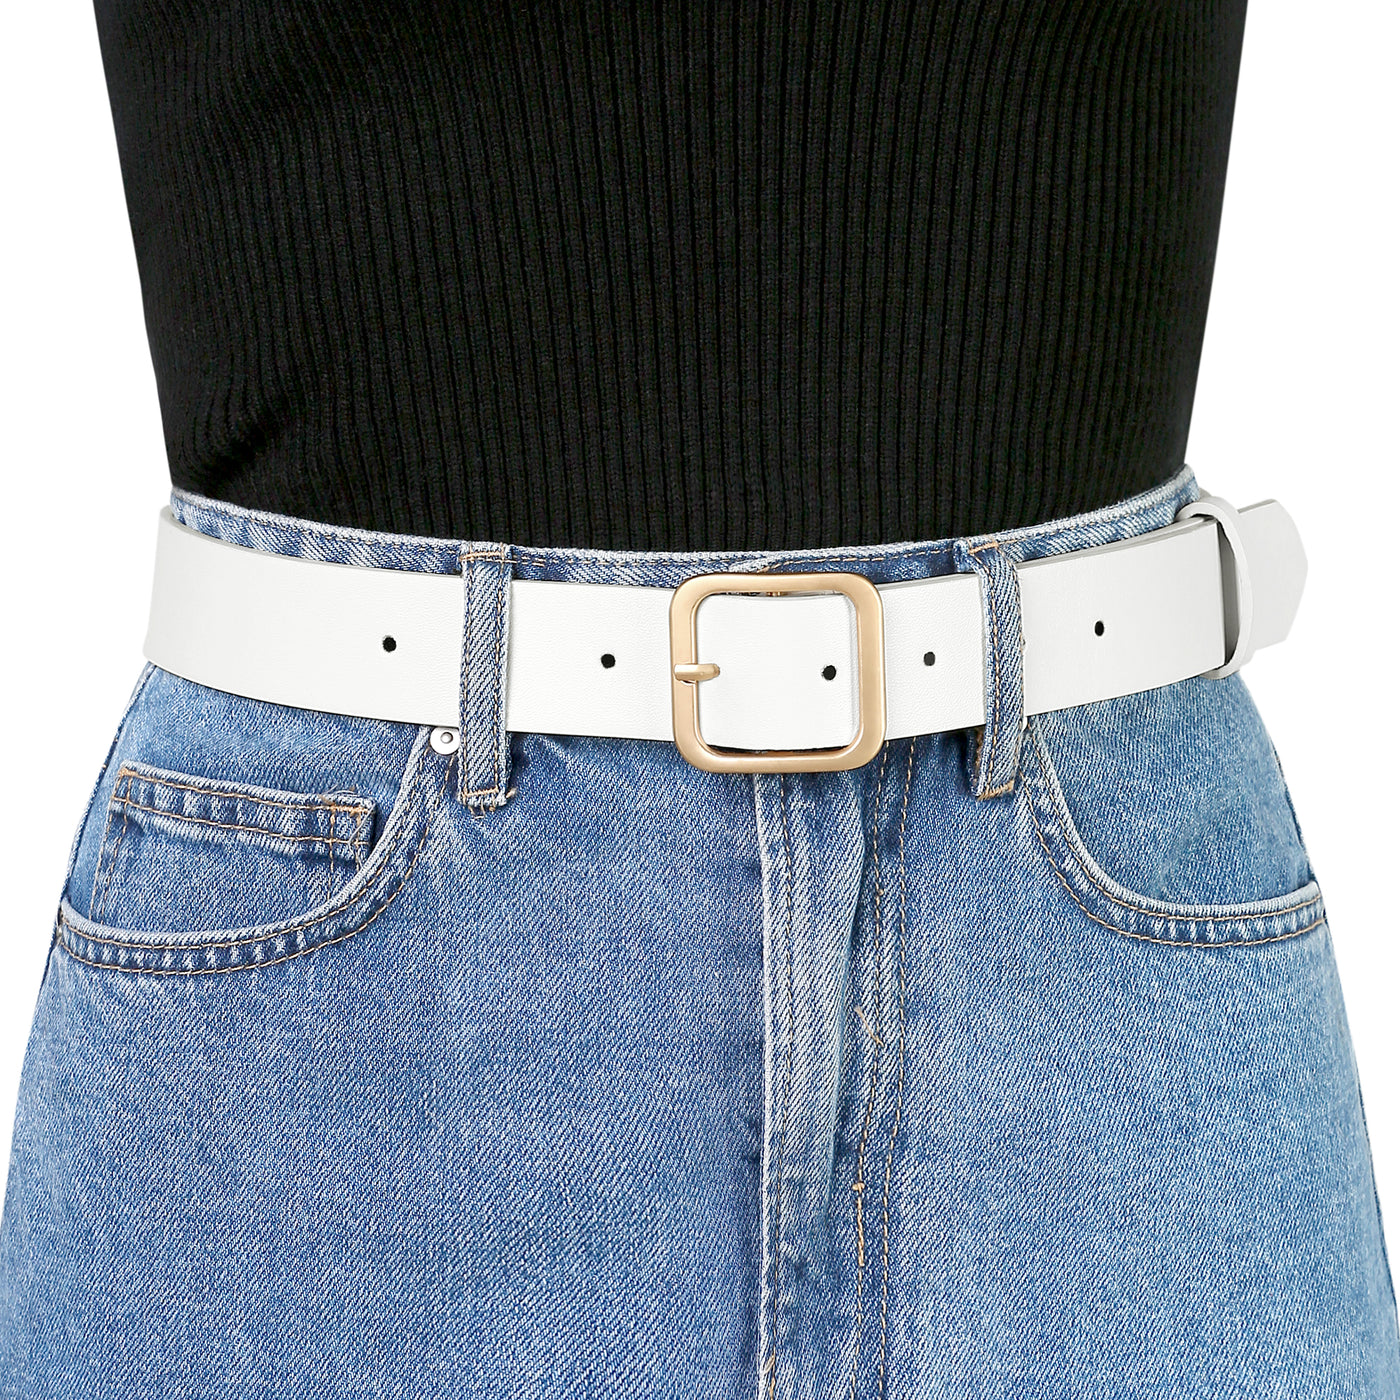 Allegra K Dresses Jeans Pants Pin Buckle Soft Wide Waist Belt